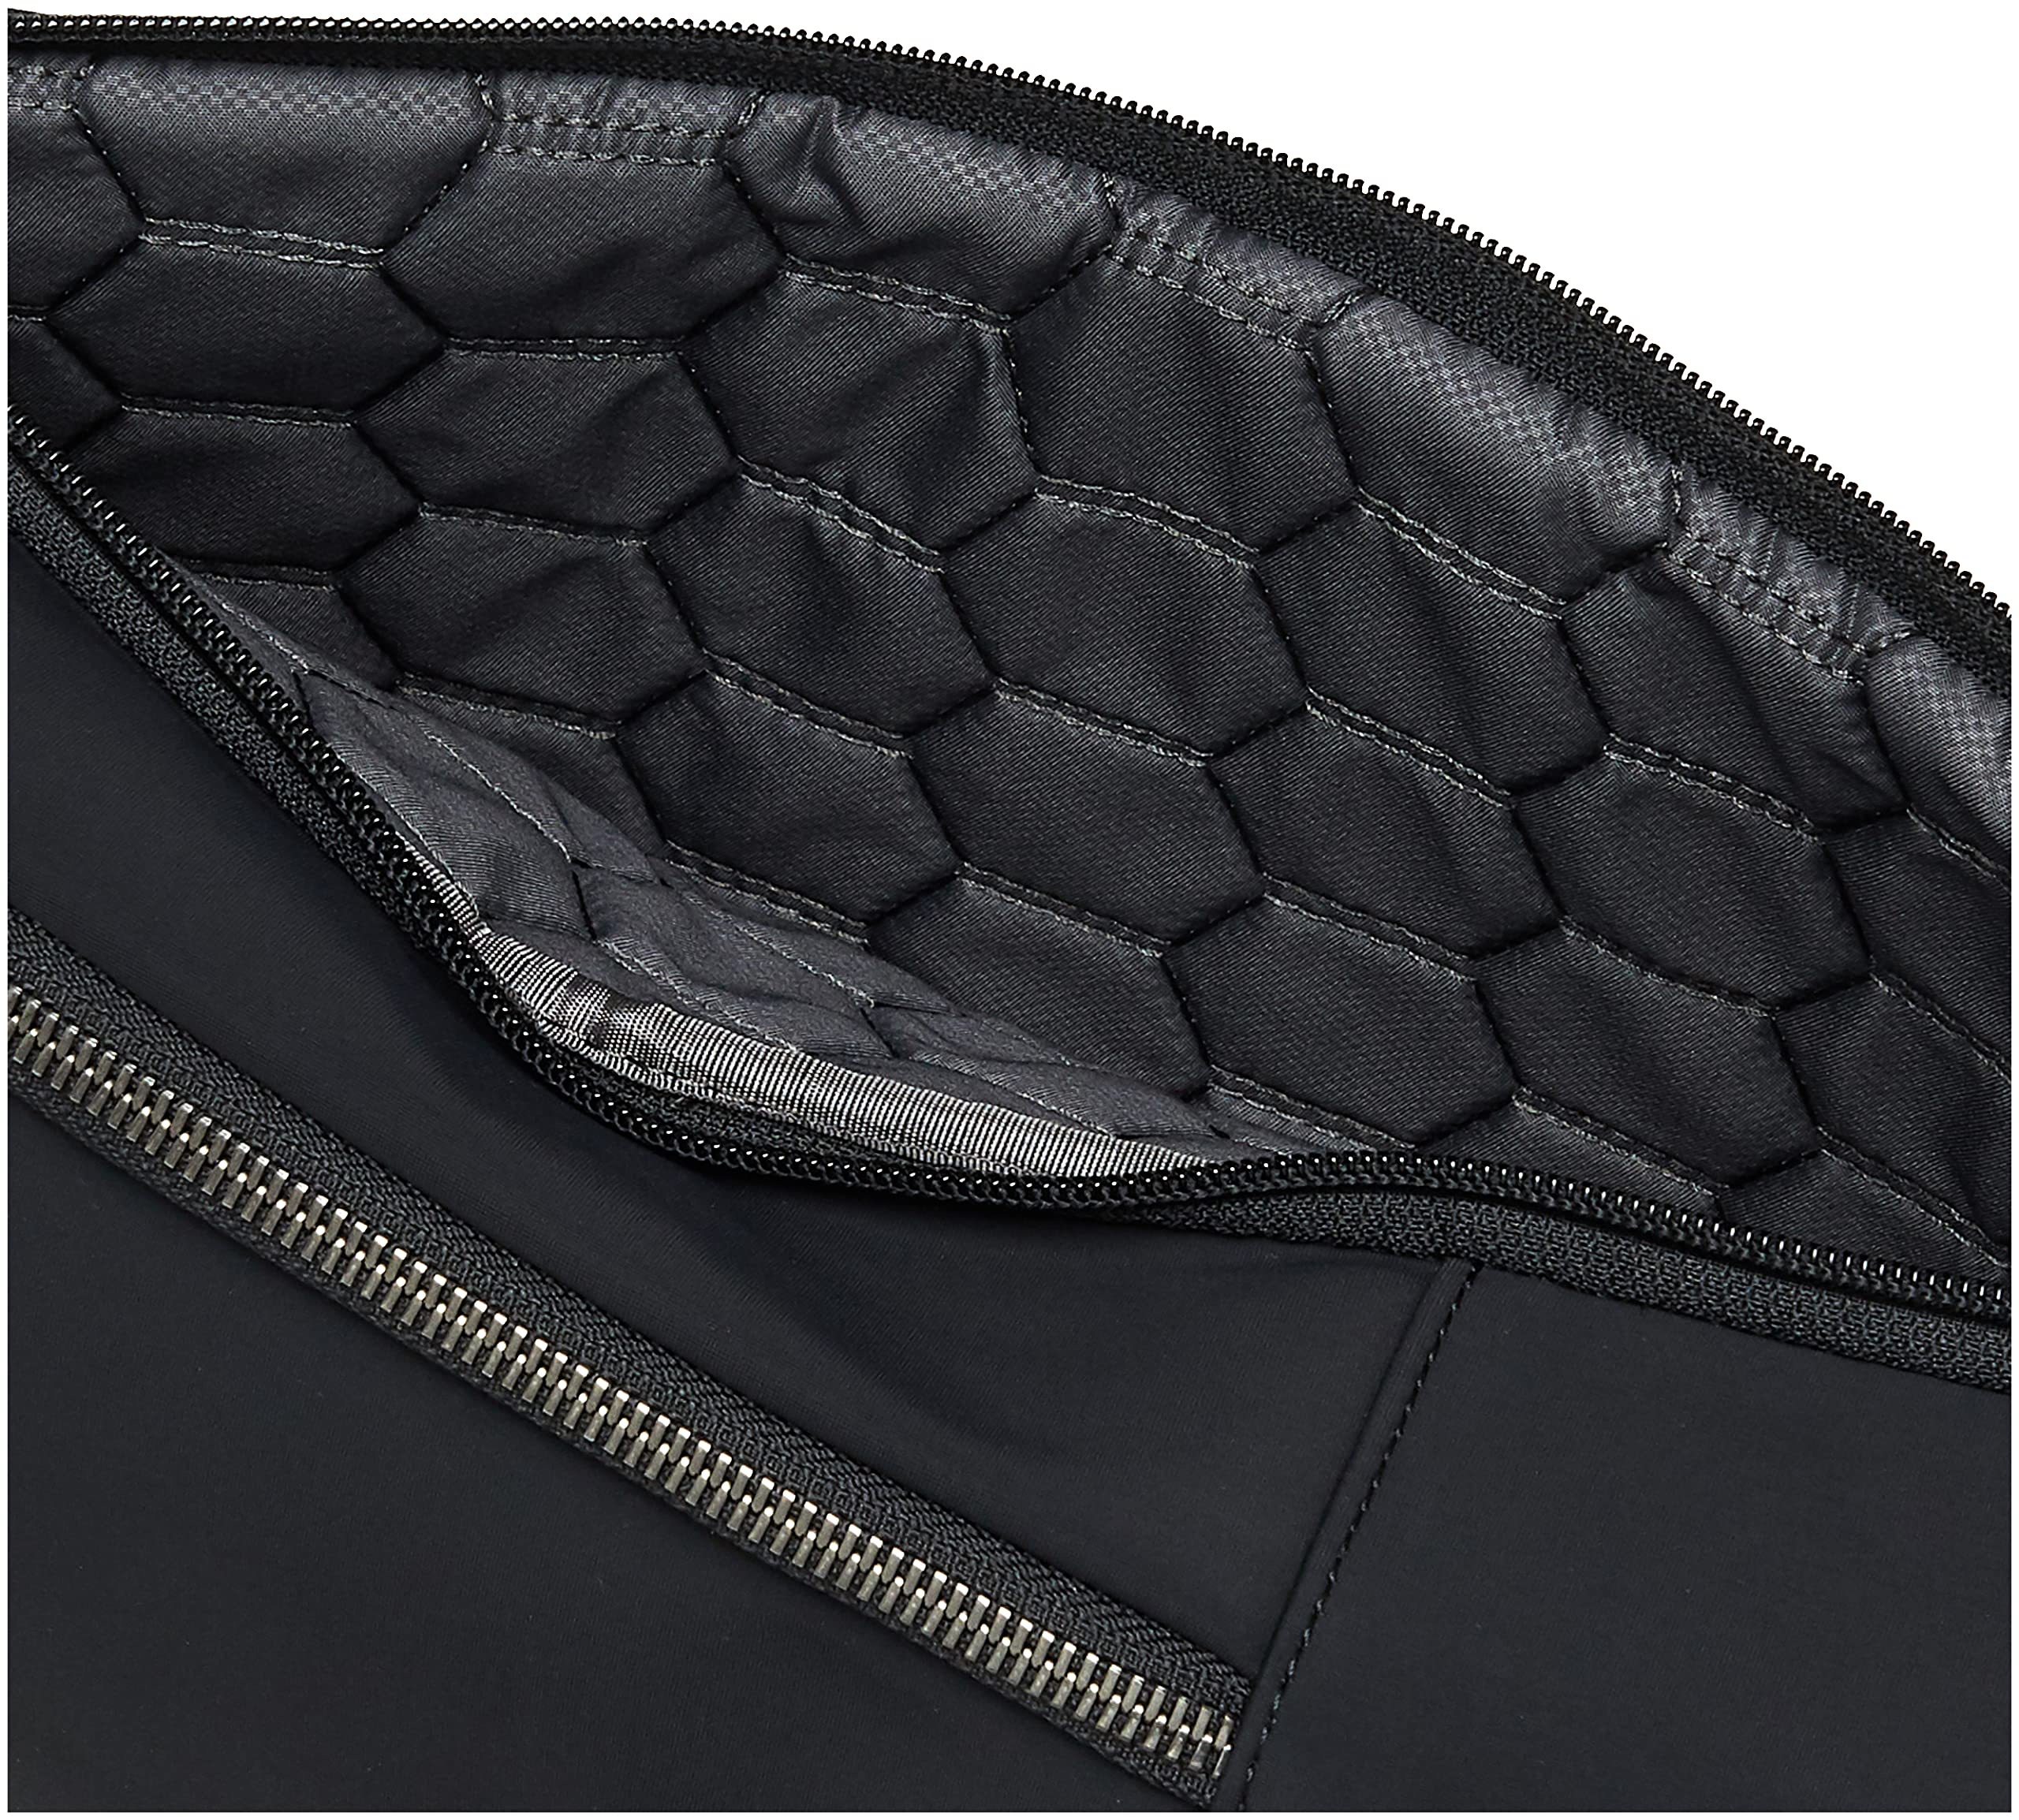 TUMI(トゥミ) Men's Business Bag, Black (Black 19-3911tcx), One Size